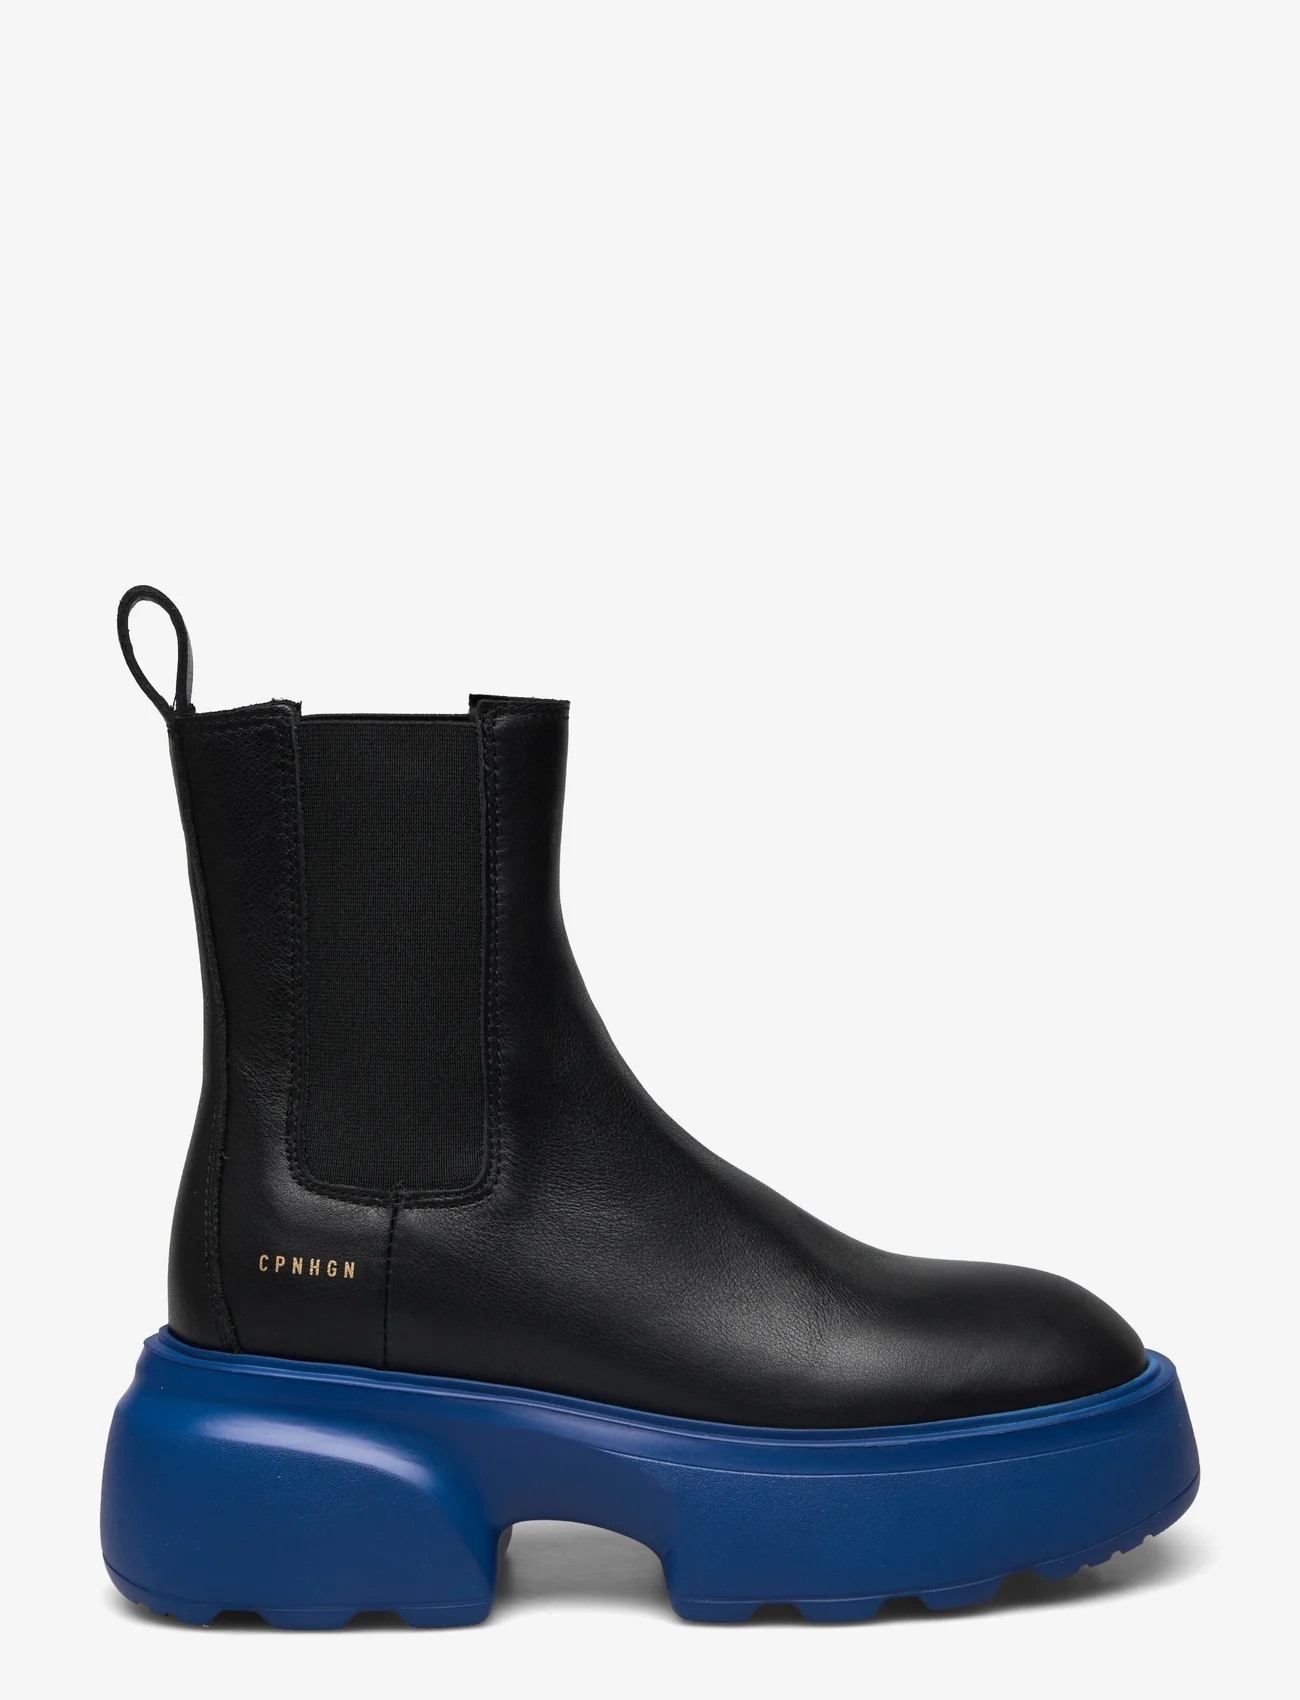 Copenhagen Studios - CPH276 - chelsea boots - black/royal blue - 1